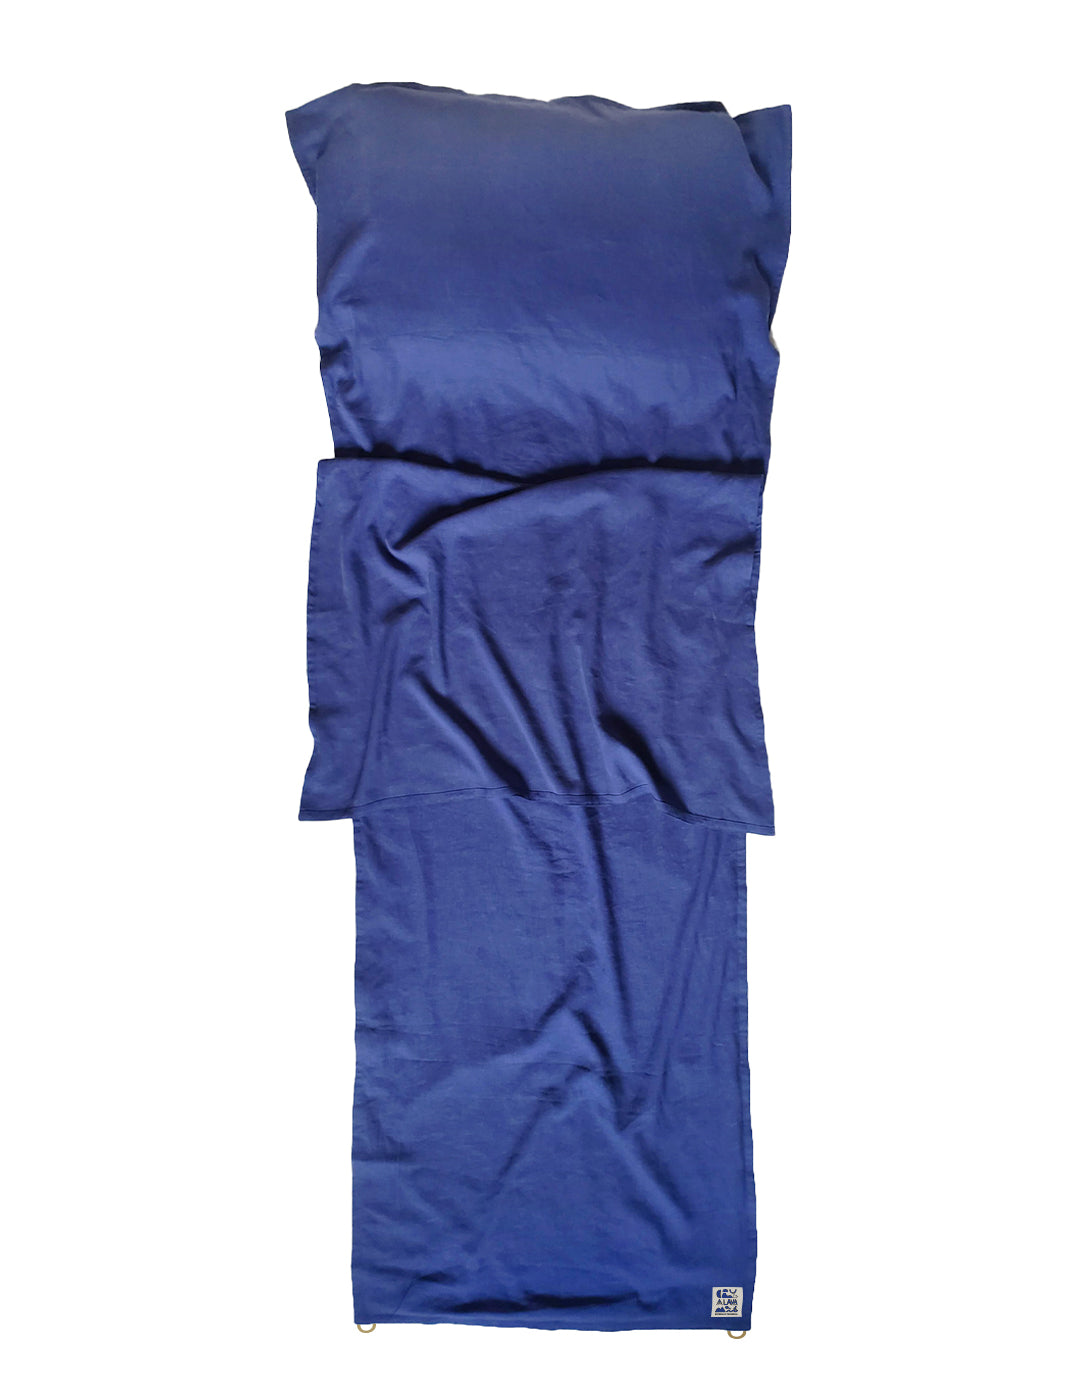 eco-friendly sleeping bag liner